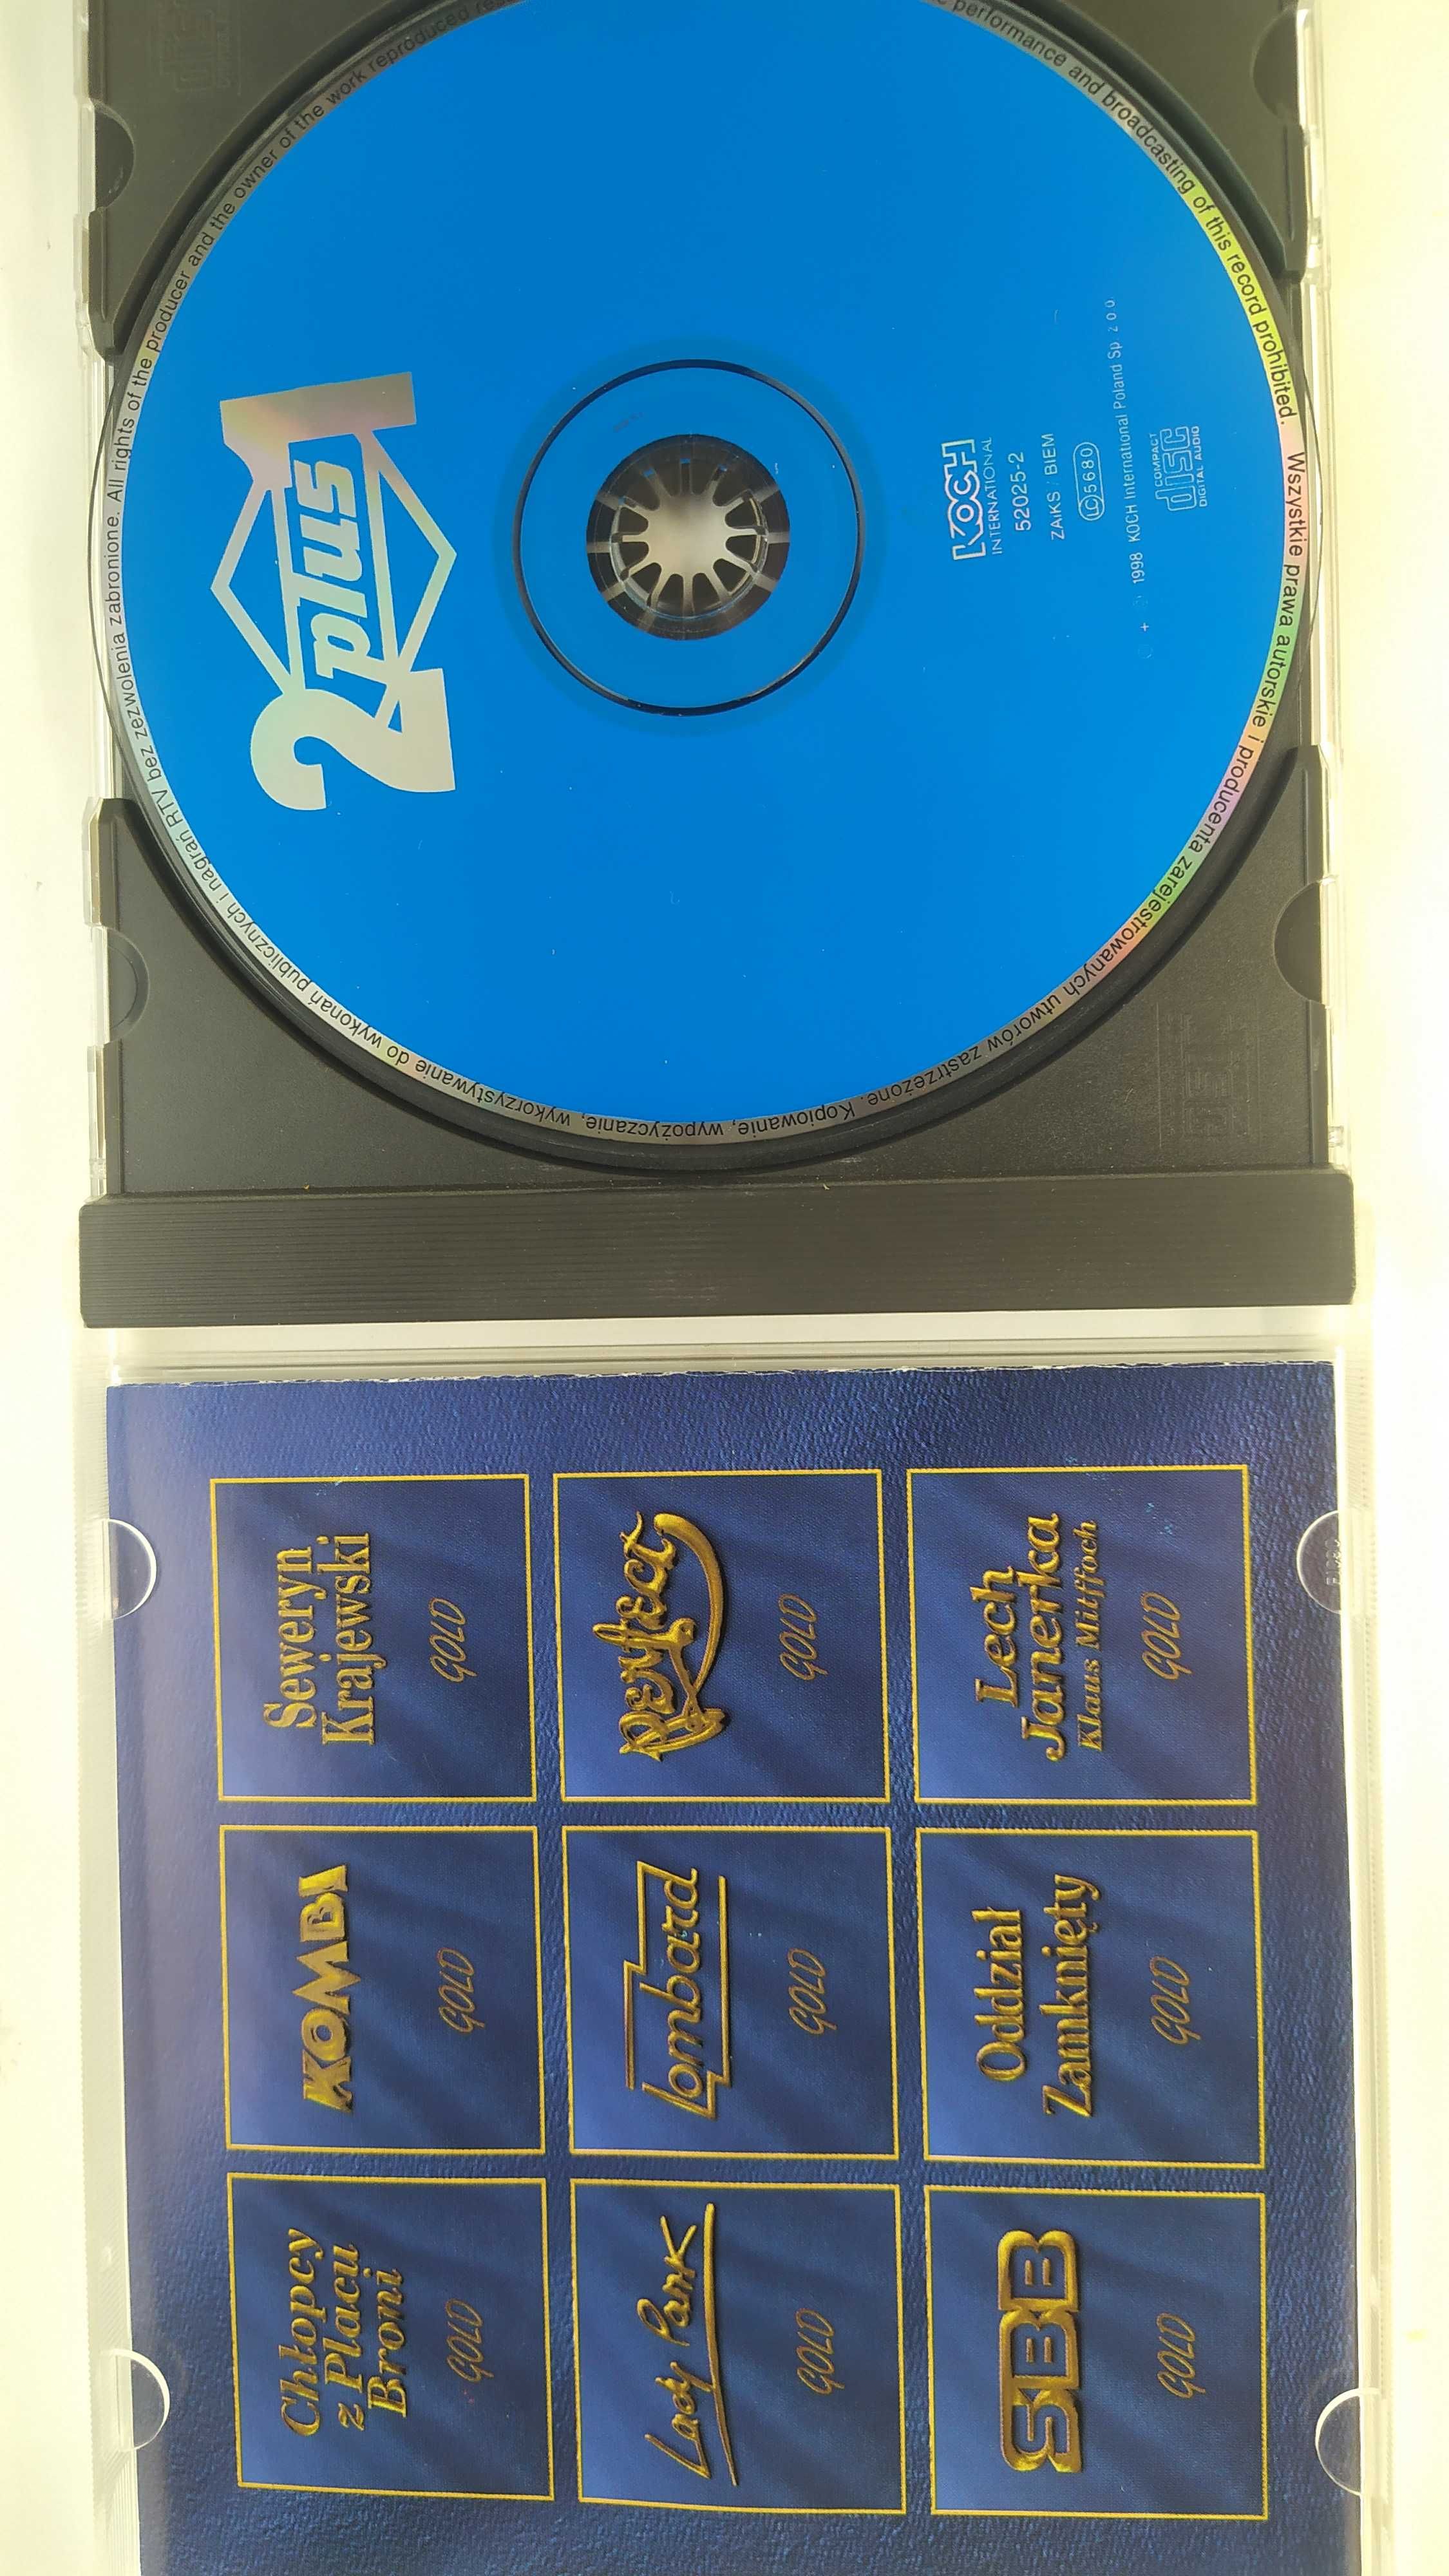 2+1 Gold Koch NIEBIESKI CD